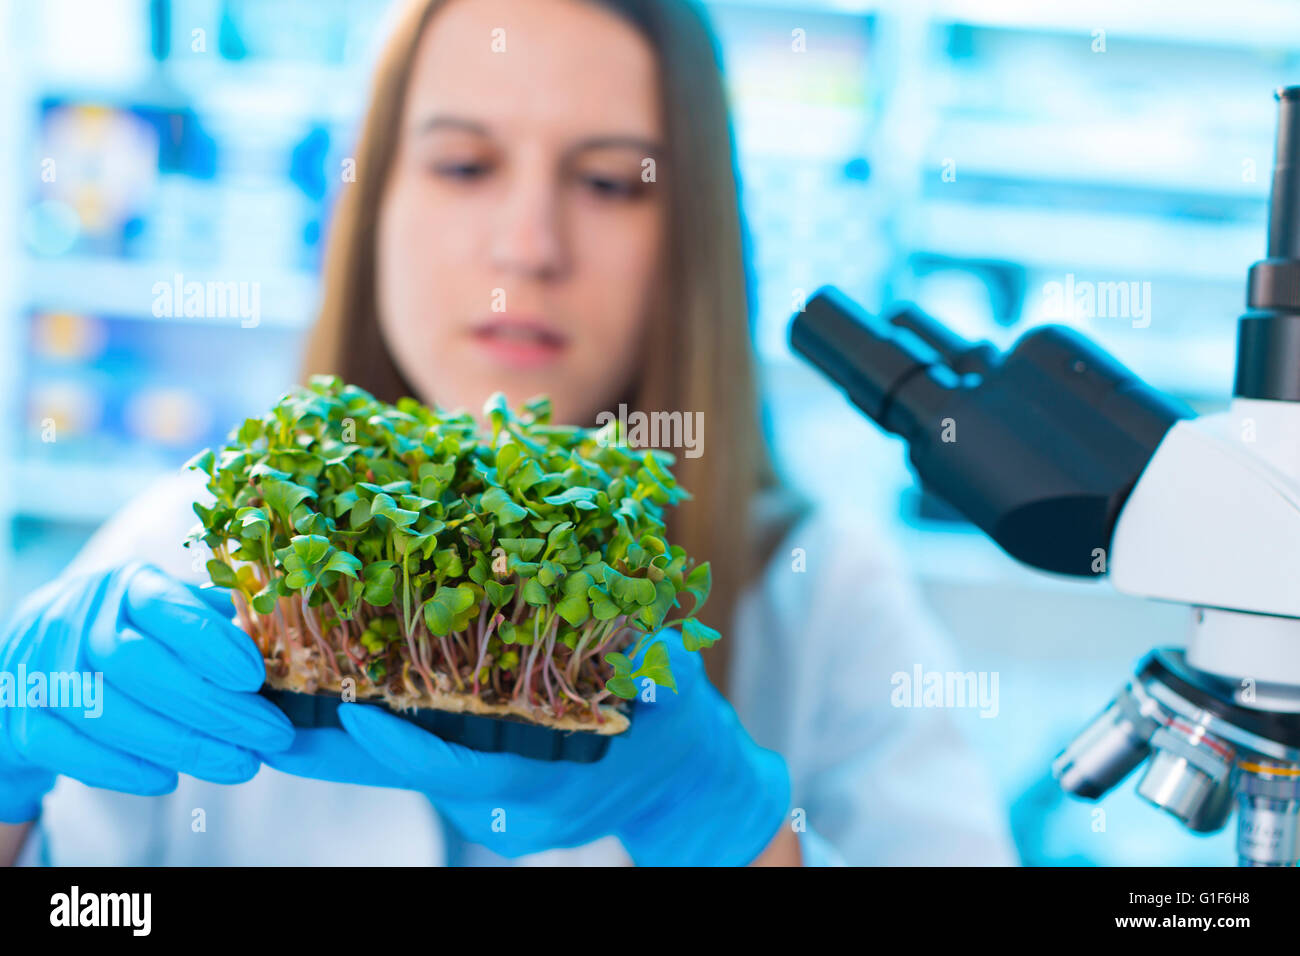 MODEL RELEASED. Female biologist holding tray of seedlings. Stock Photo